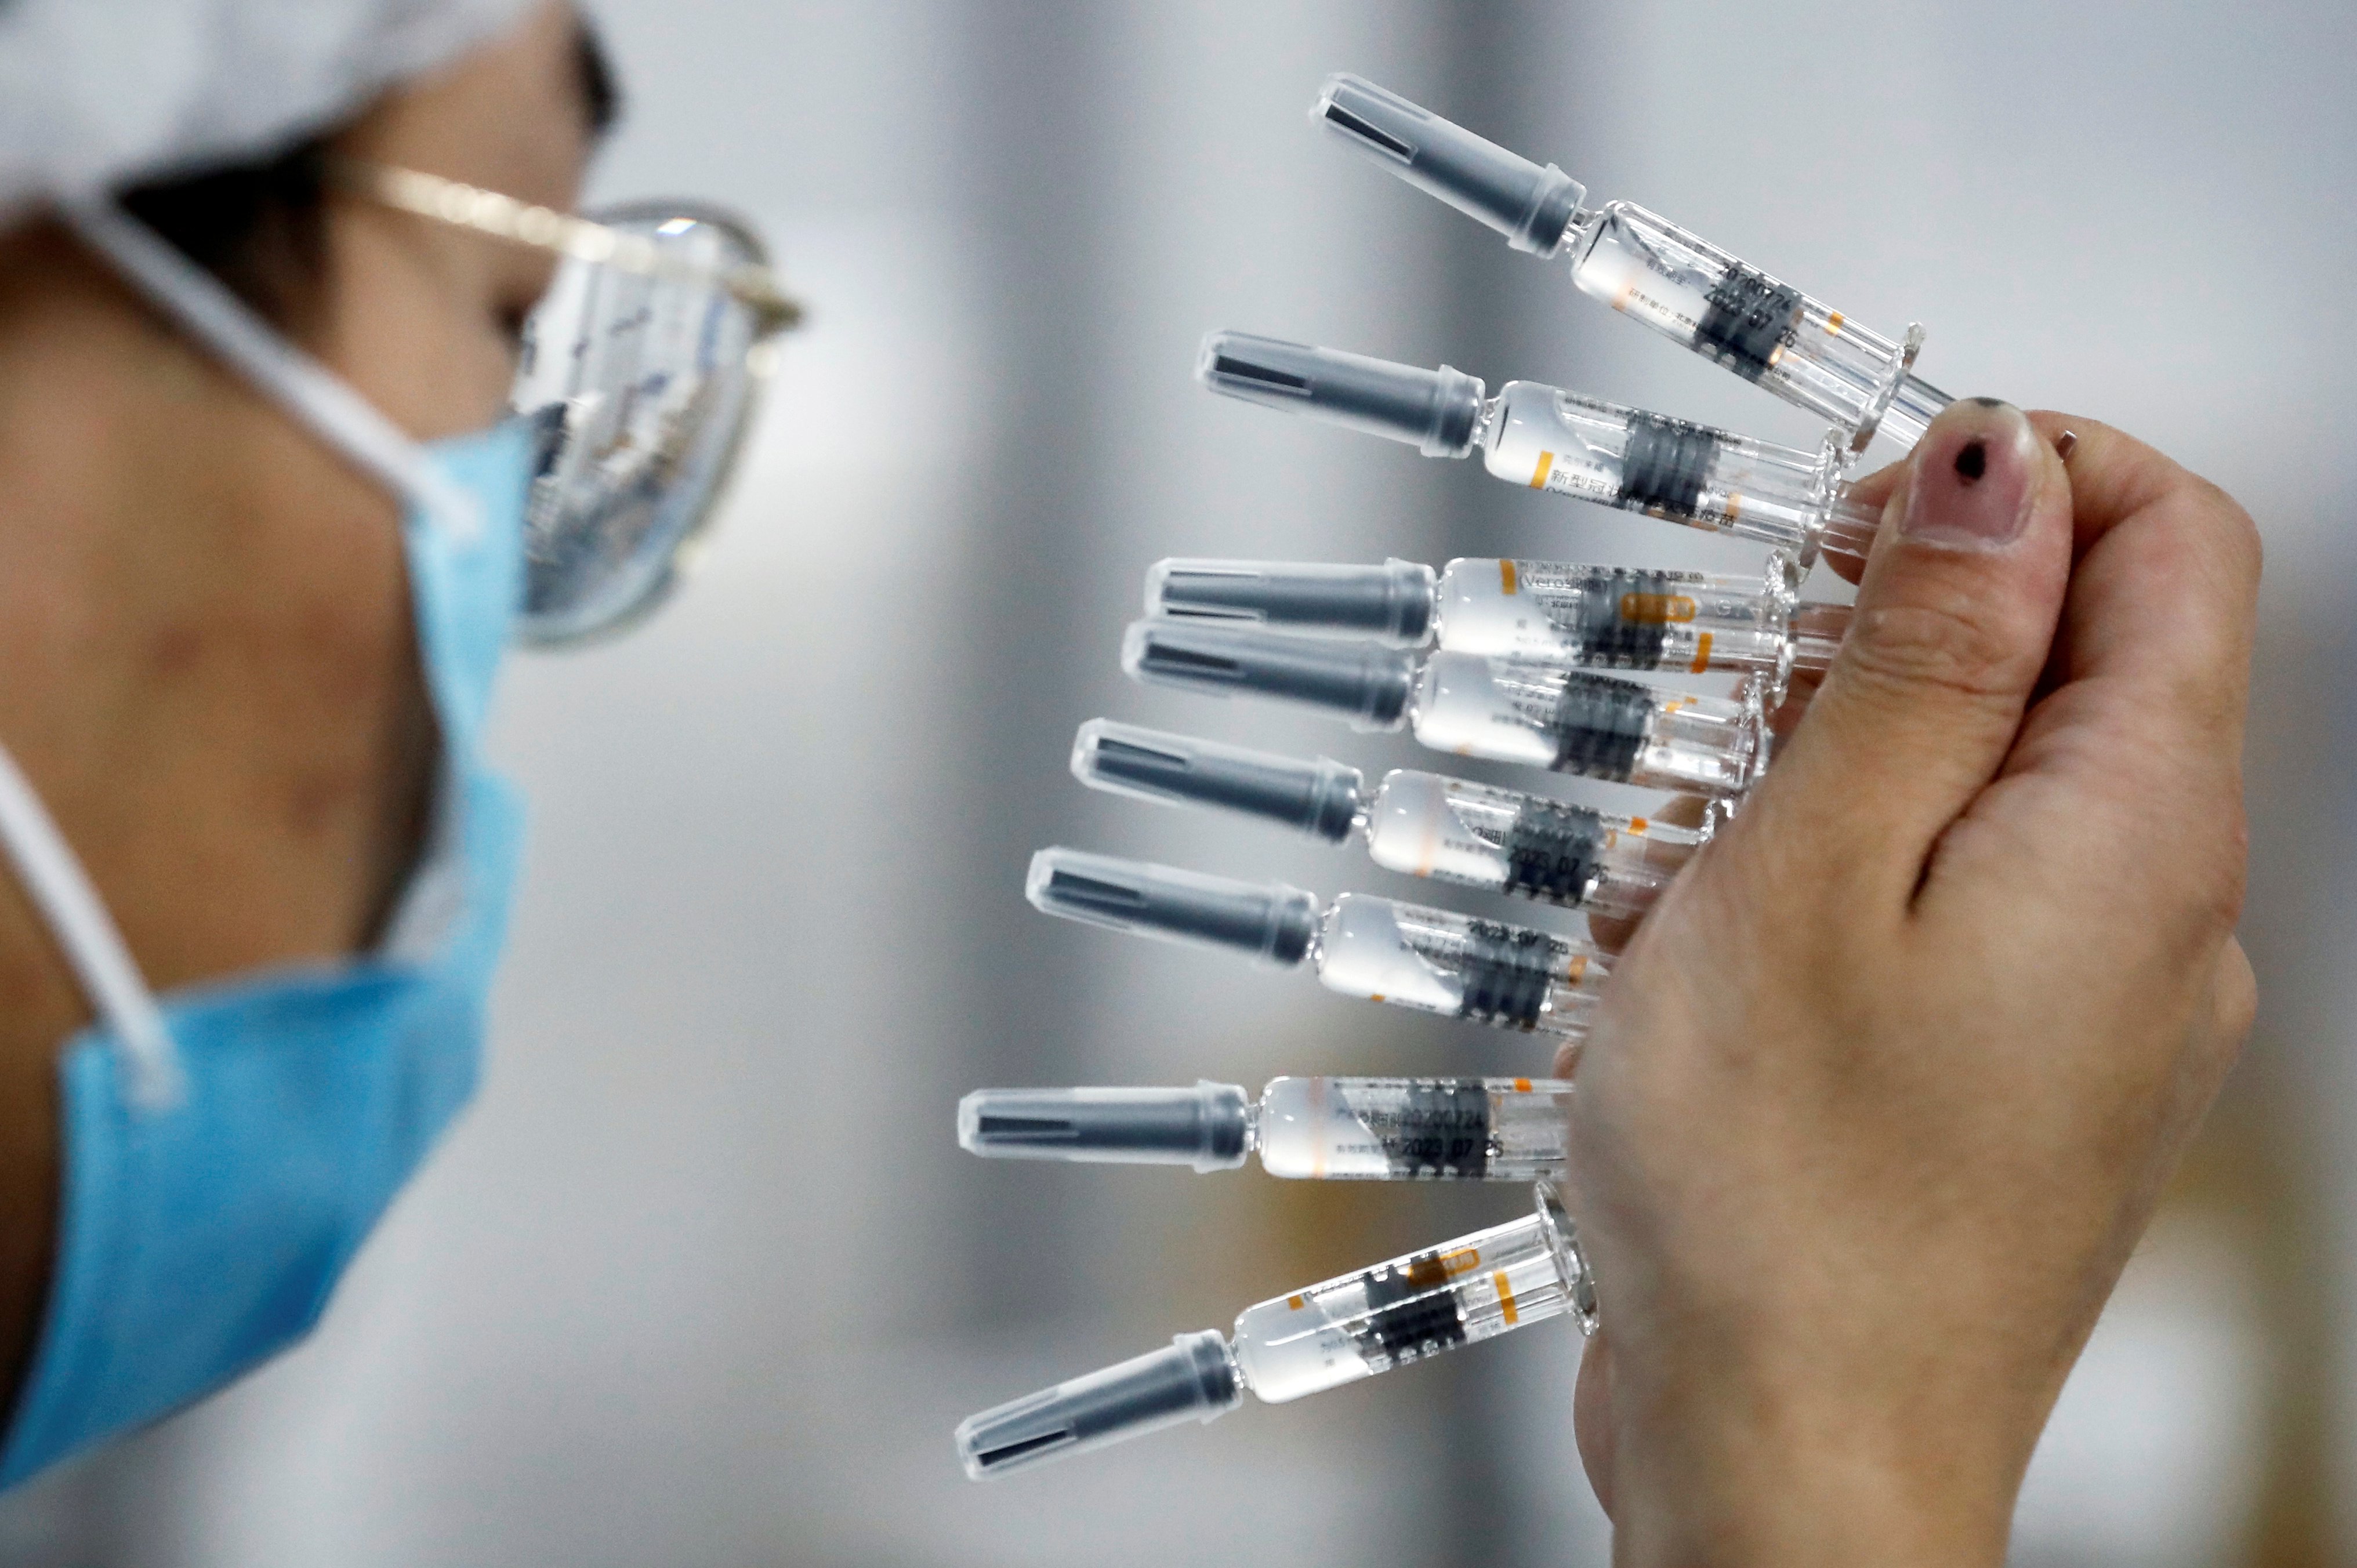 Covid vaccines create 9 new billionaires, says PVA